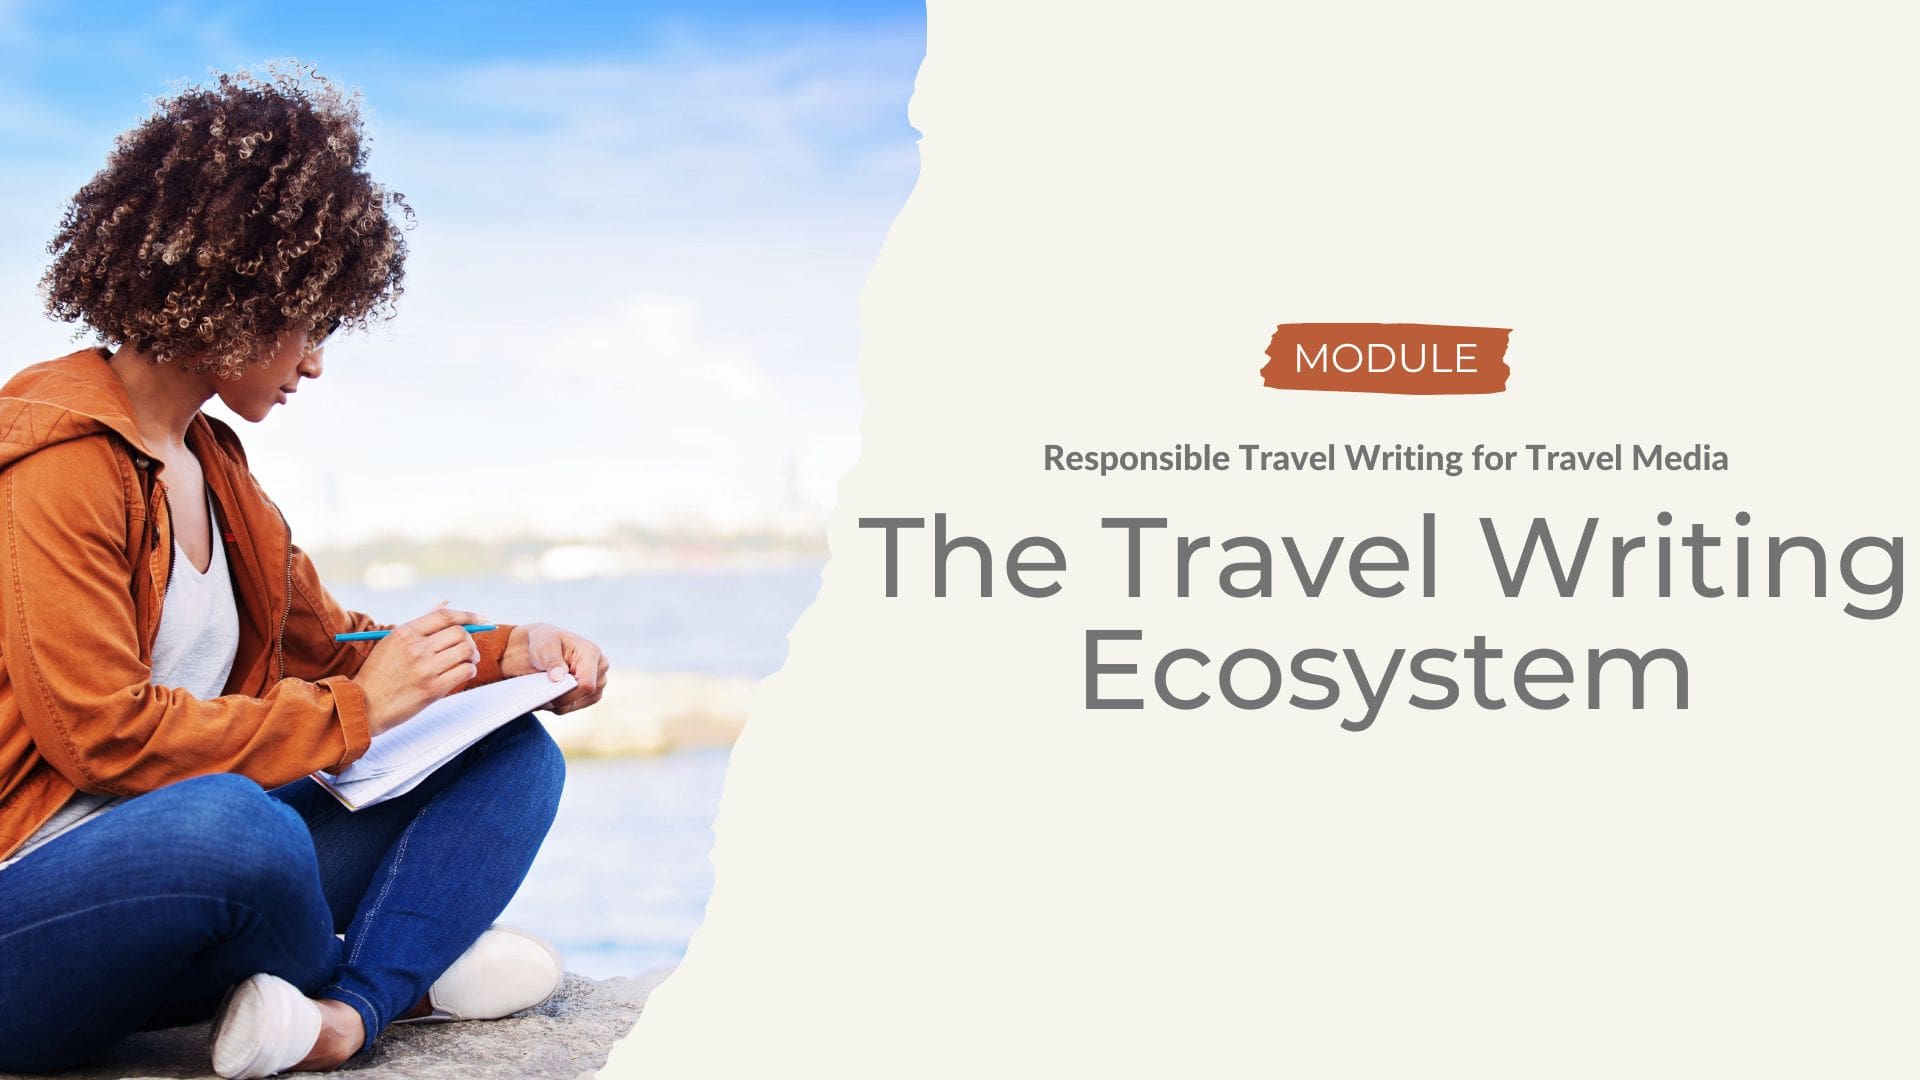 The Travel Writing Ecosystem